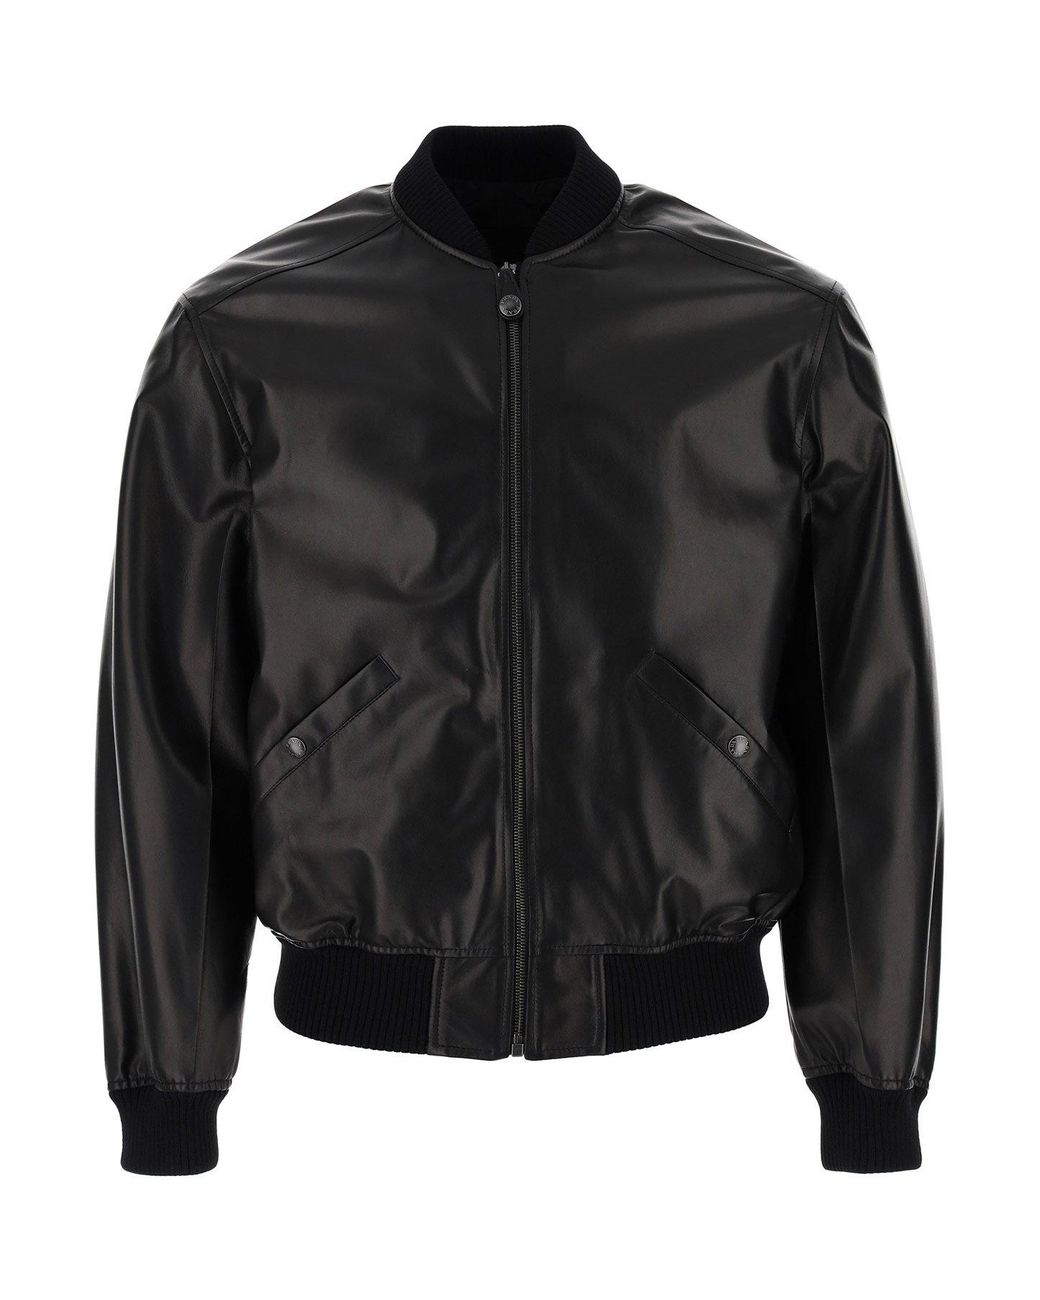 Prada Leather Bomber Jacket in Black for Men - Save 6% - Lyst